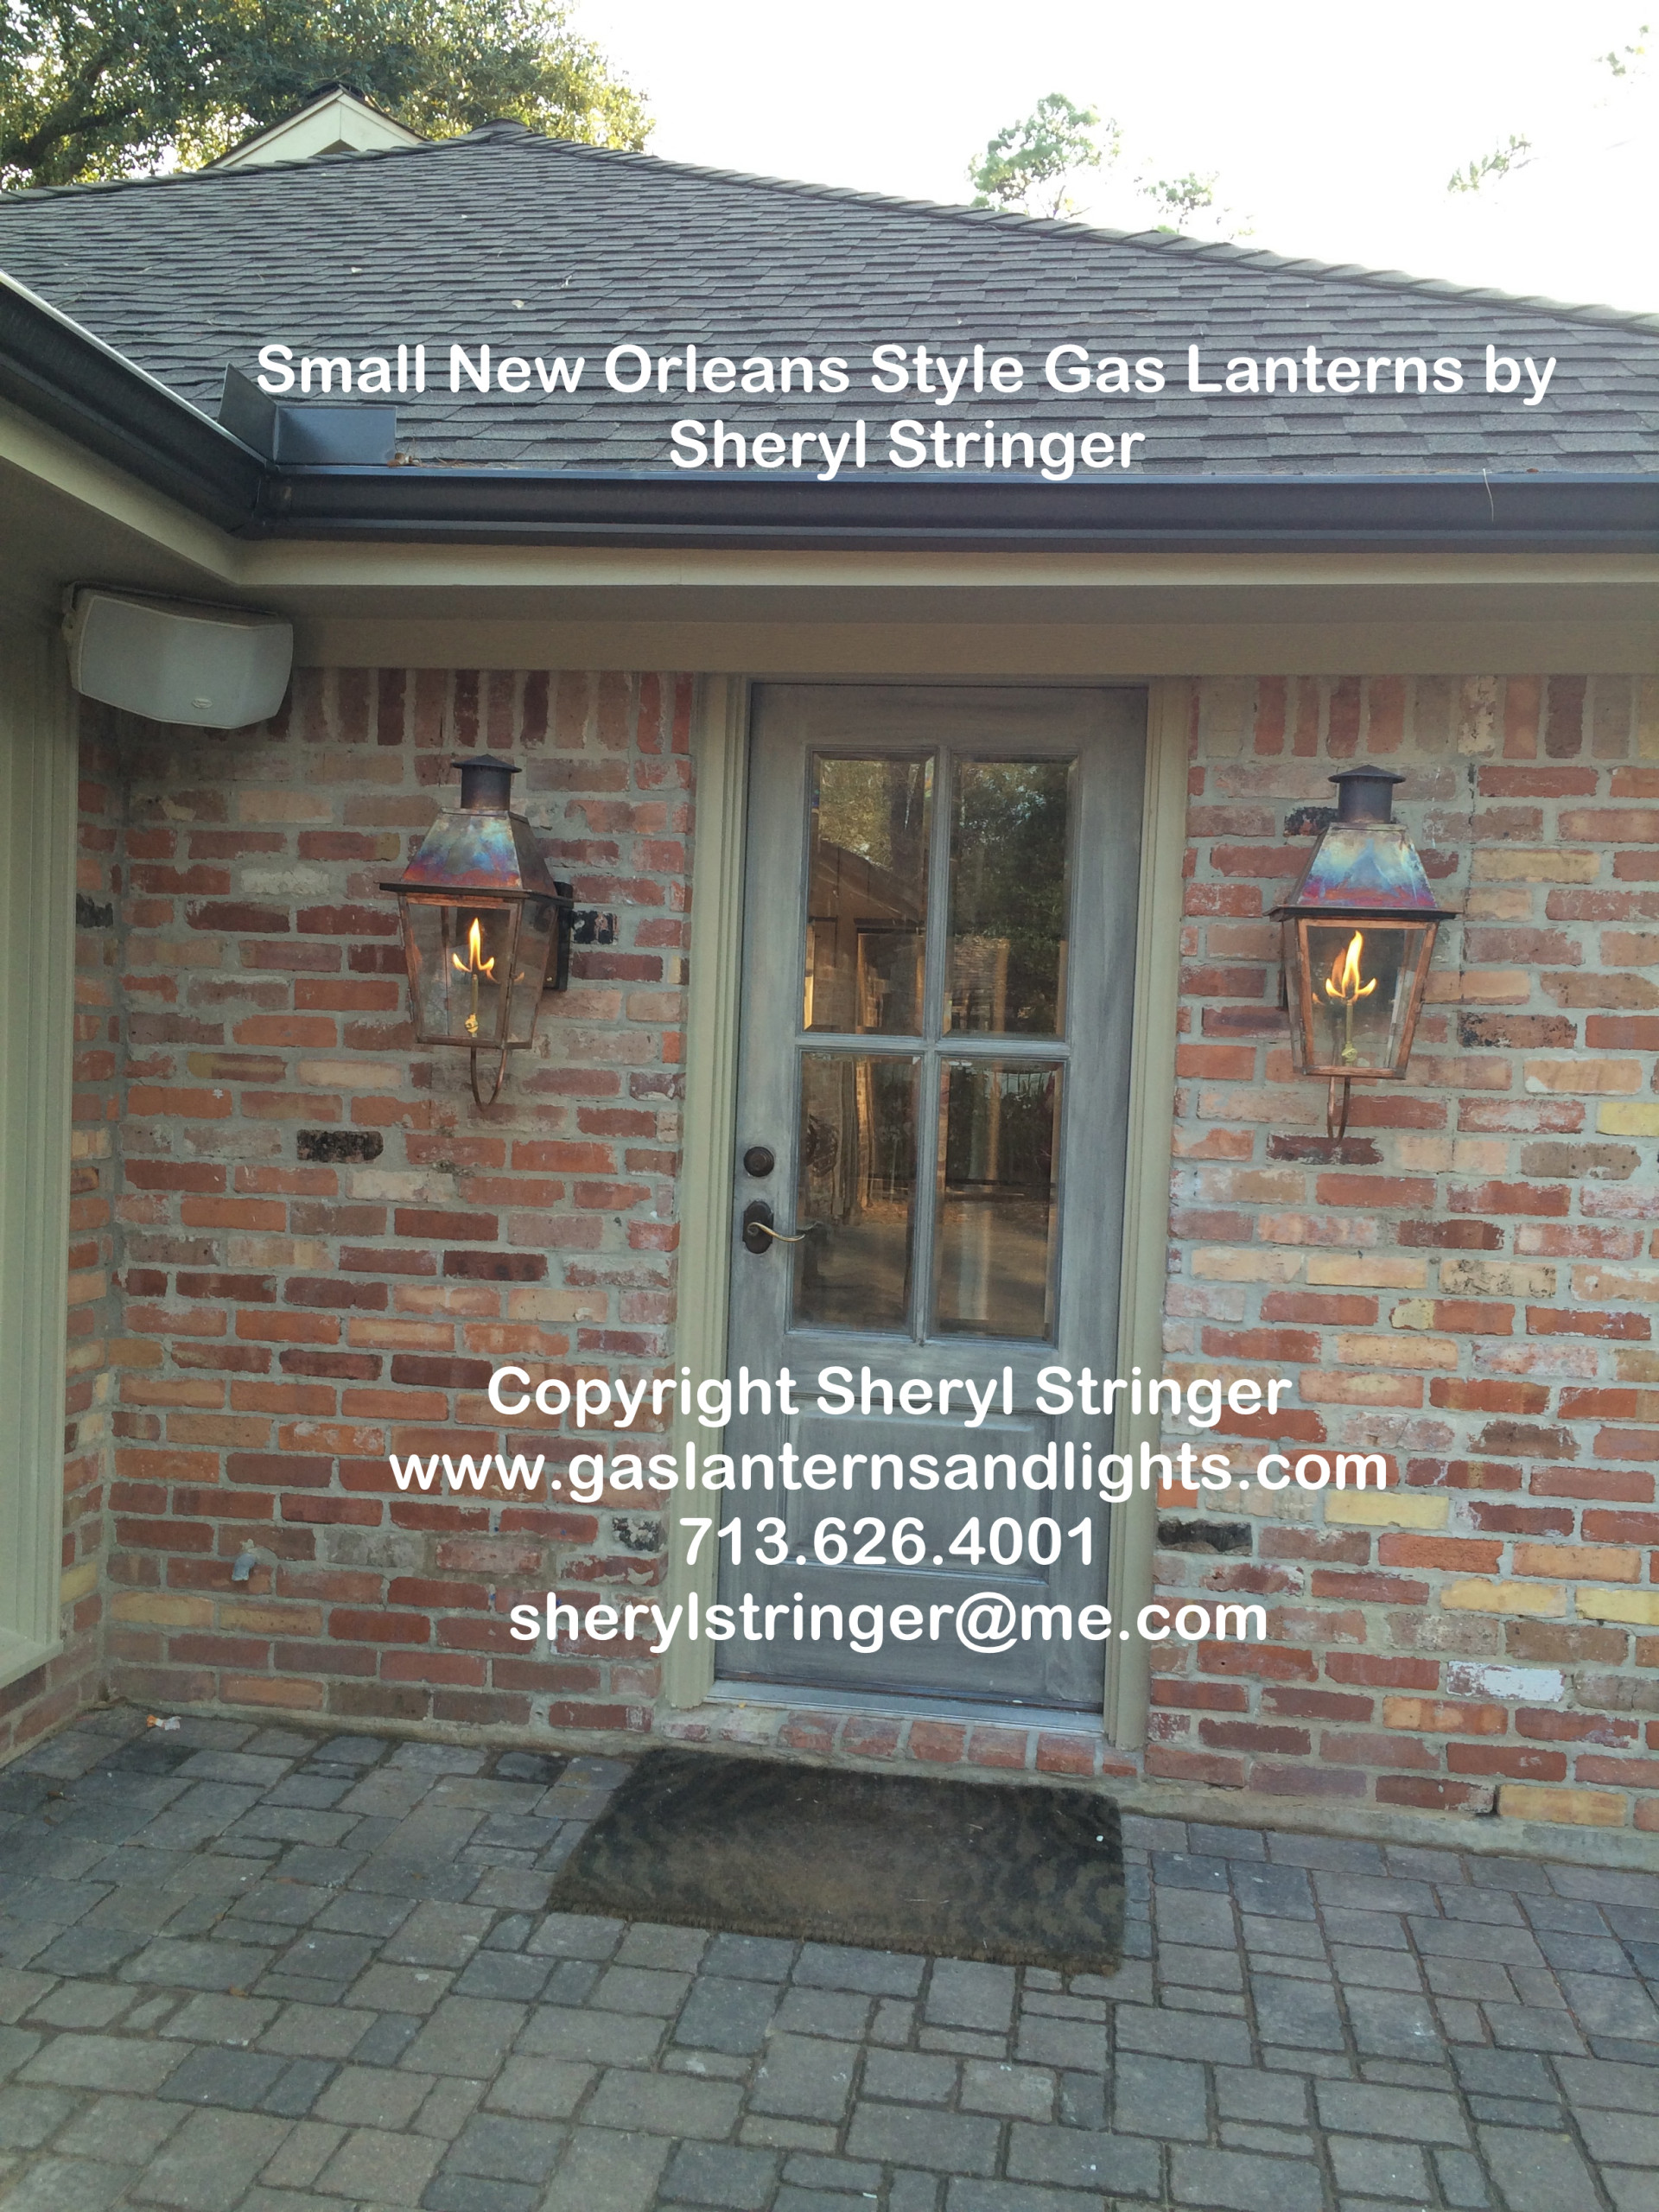 Sheryl's New Orleans Style Gas Lanterns by Kitchen Door